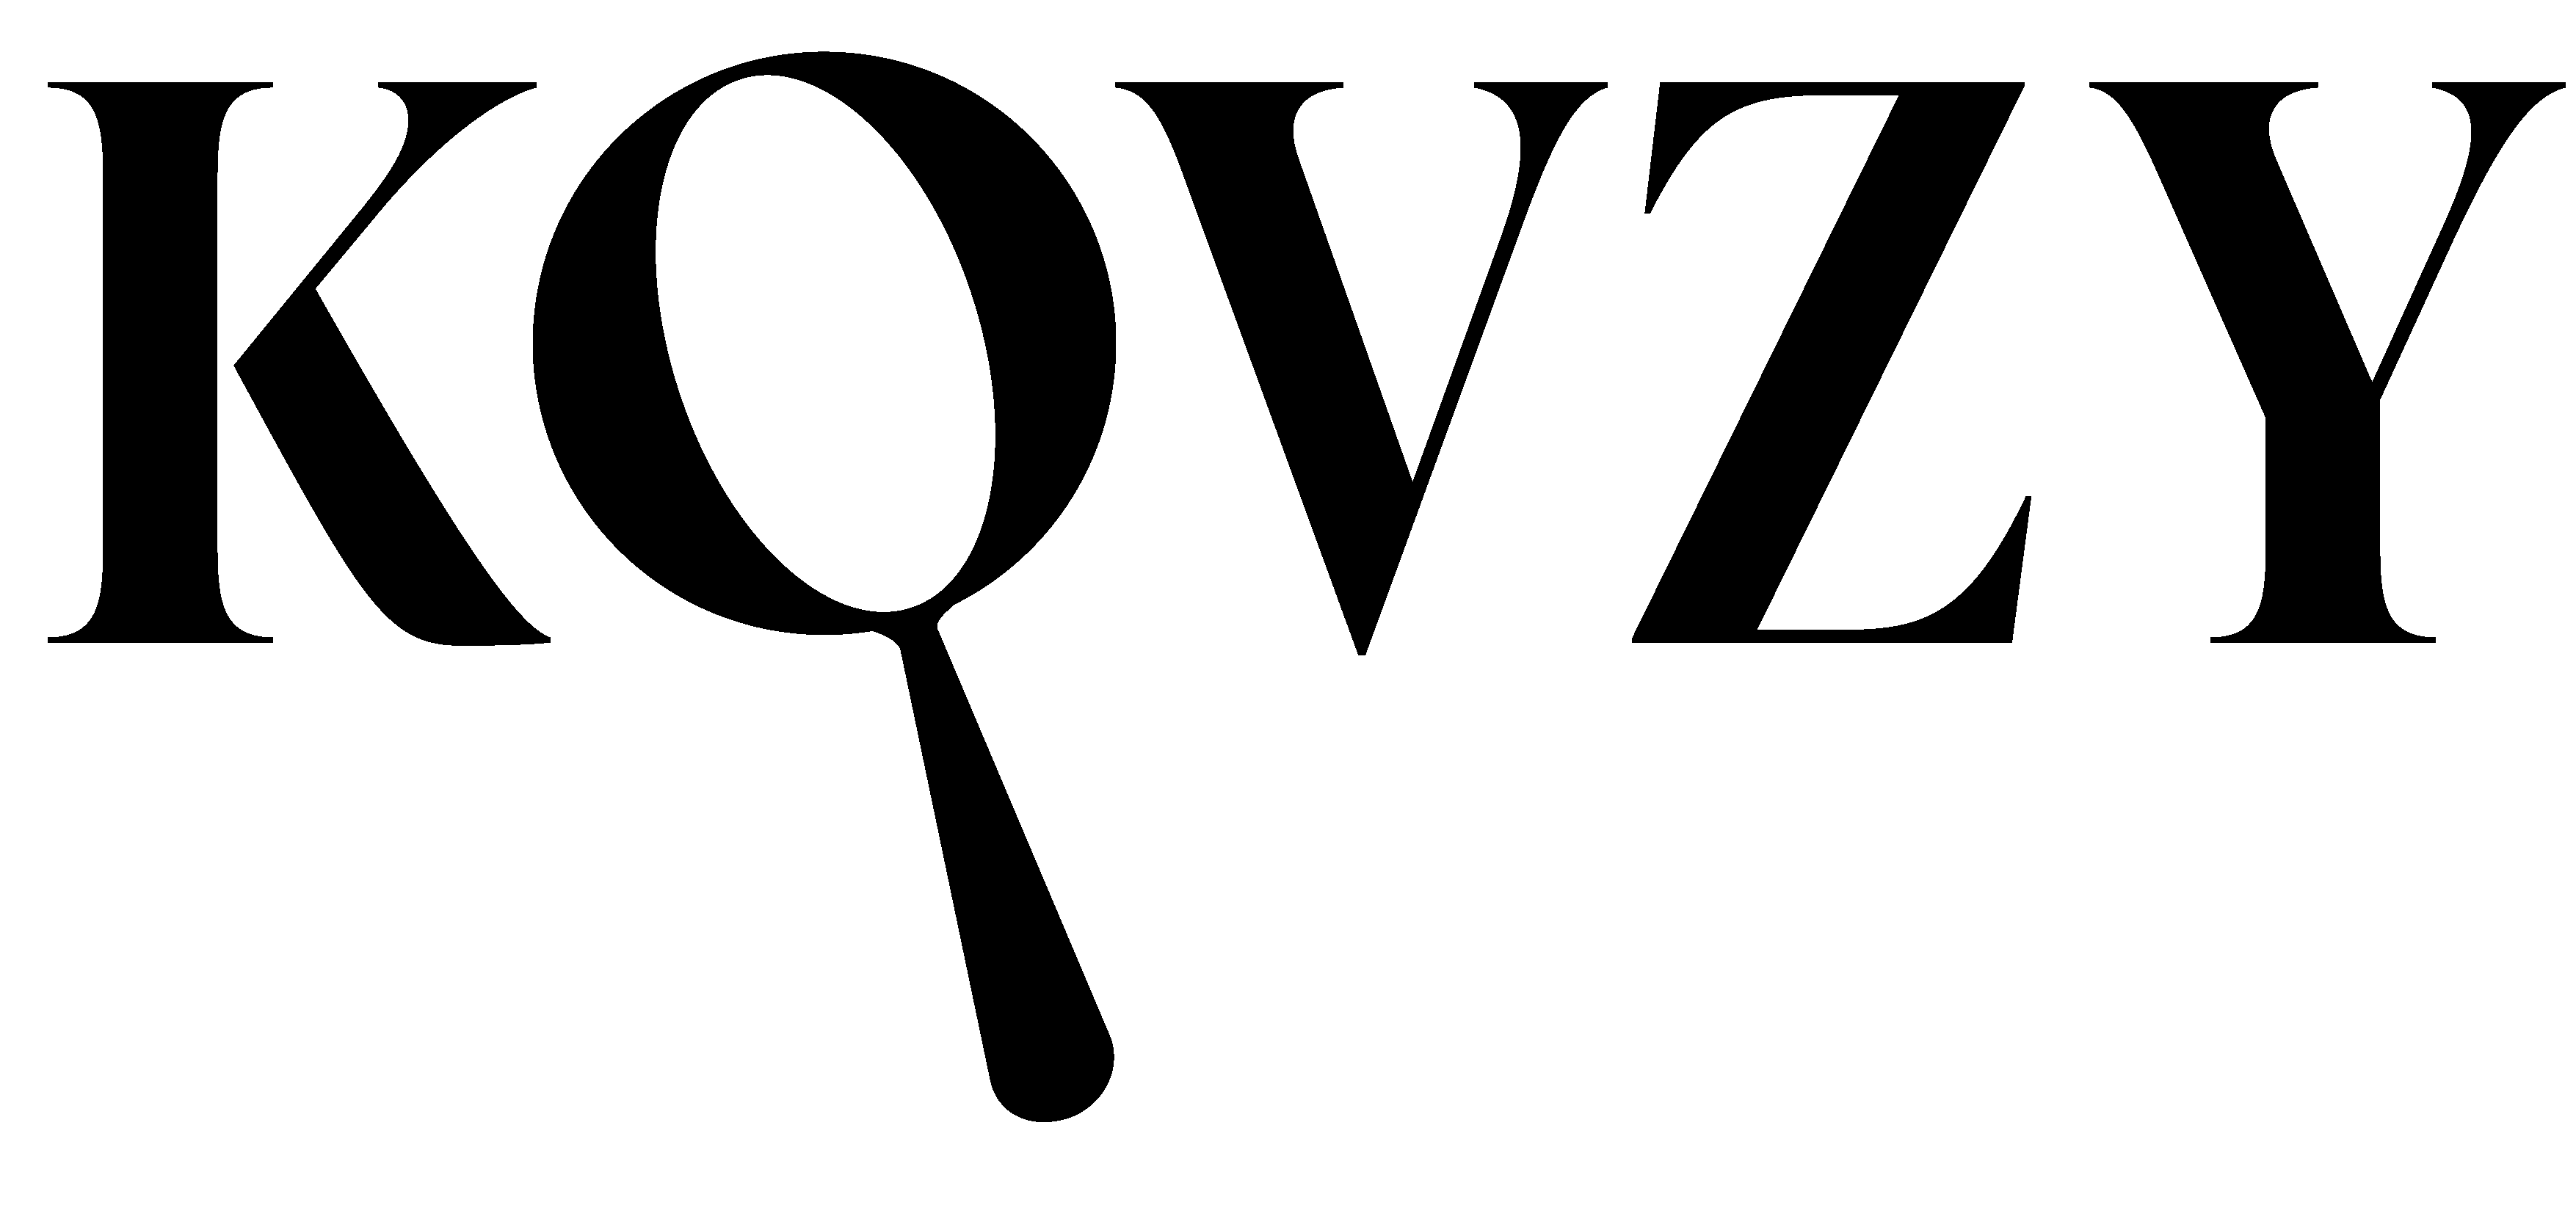 kovzy-logo